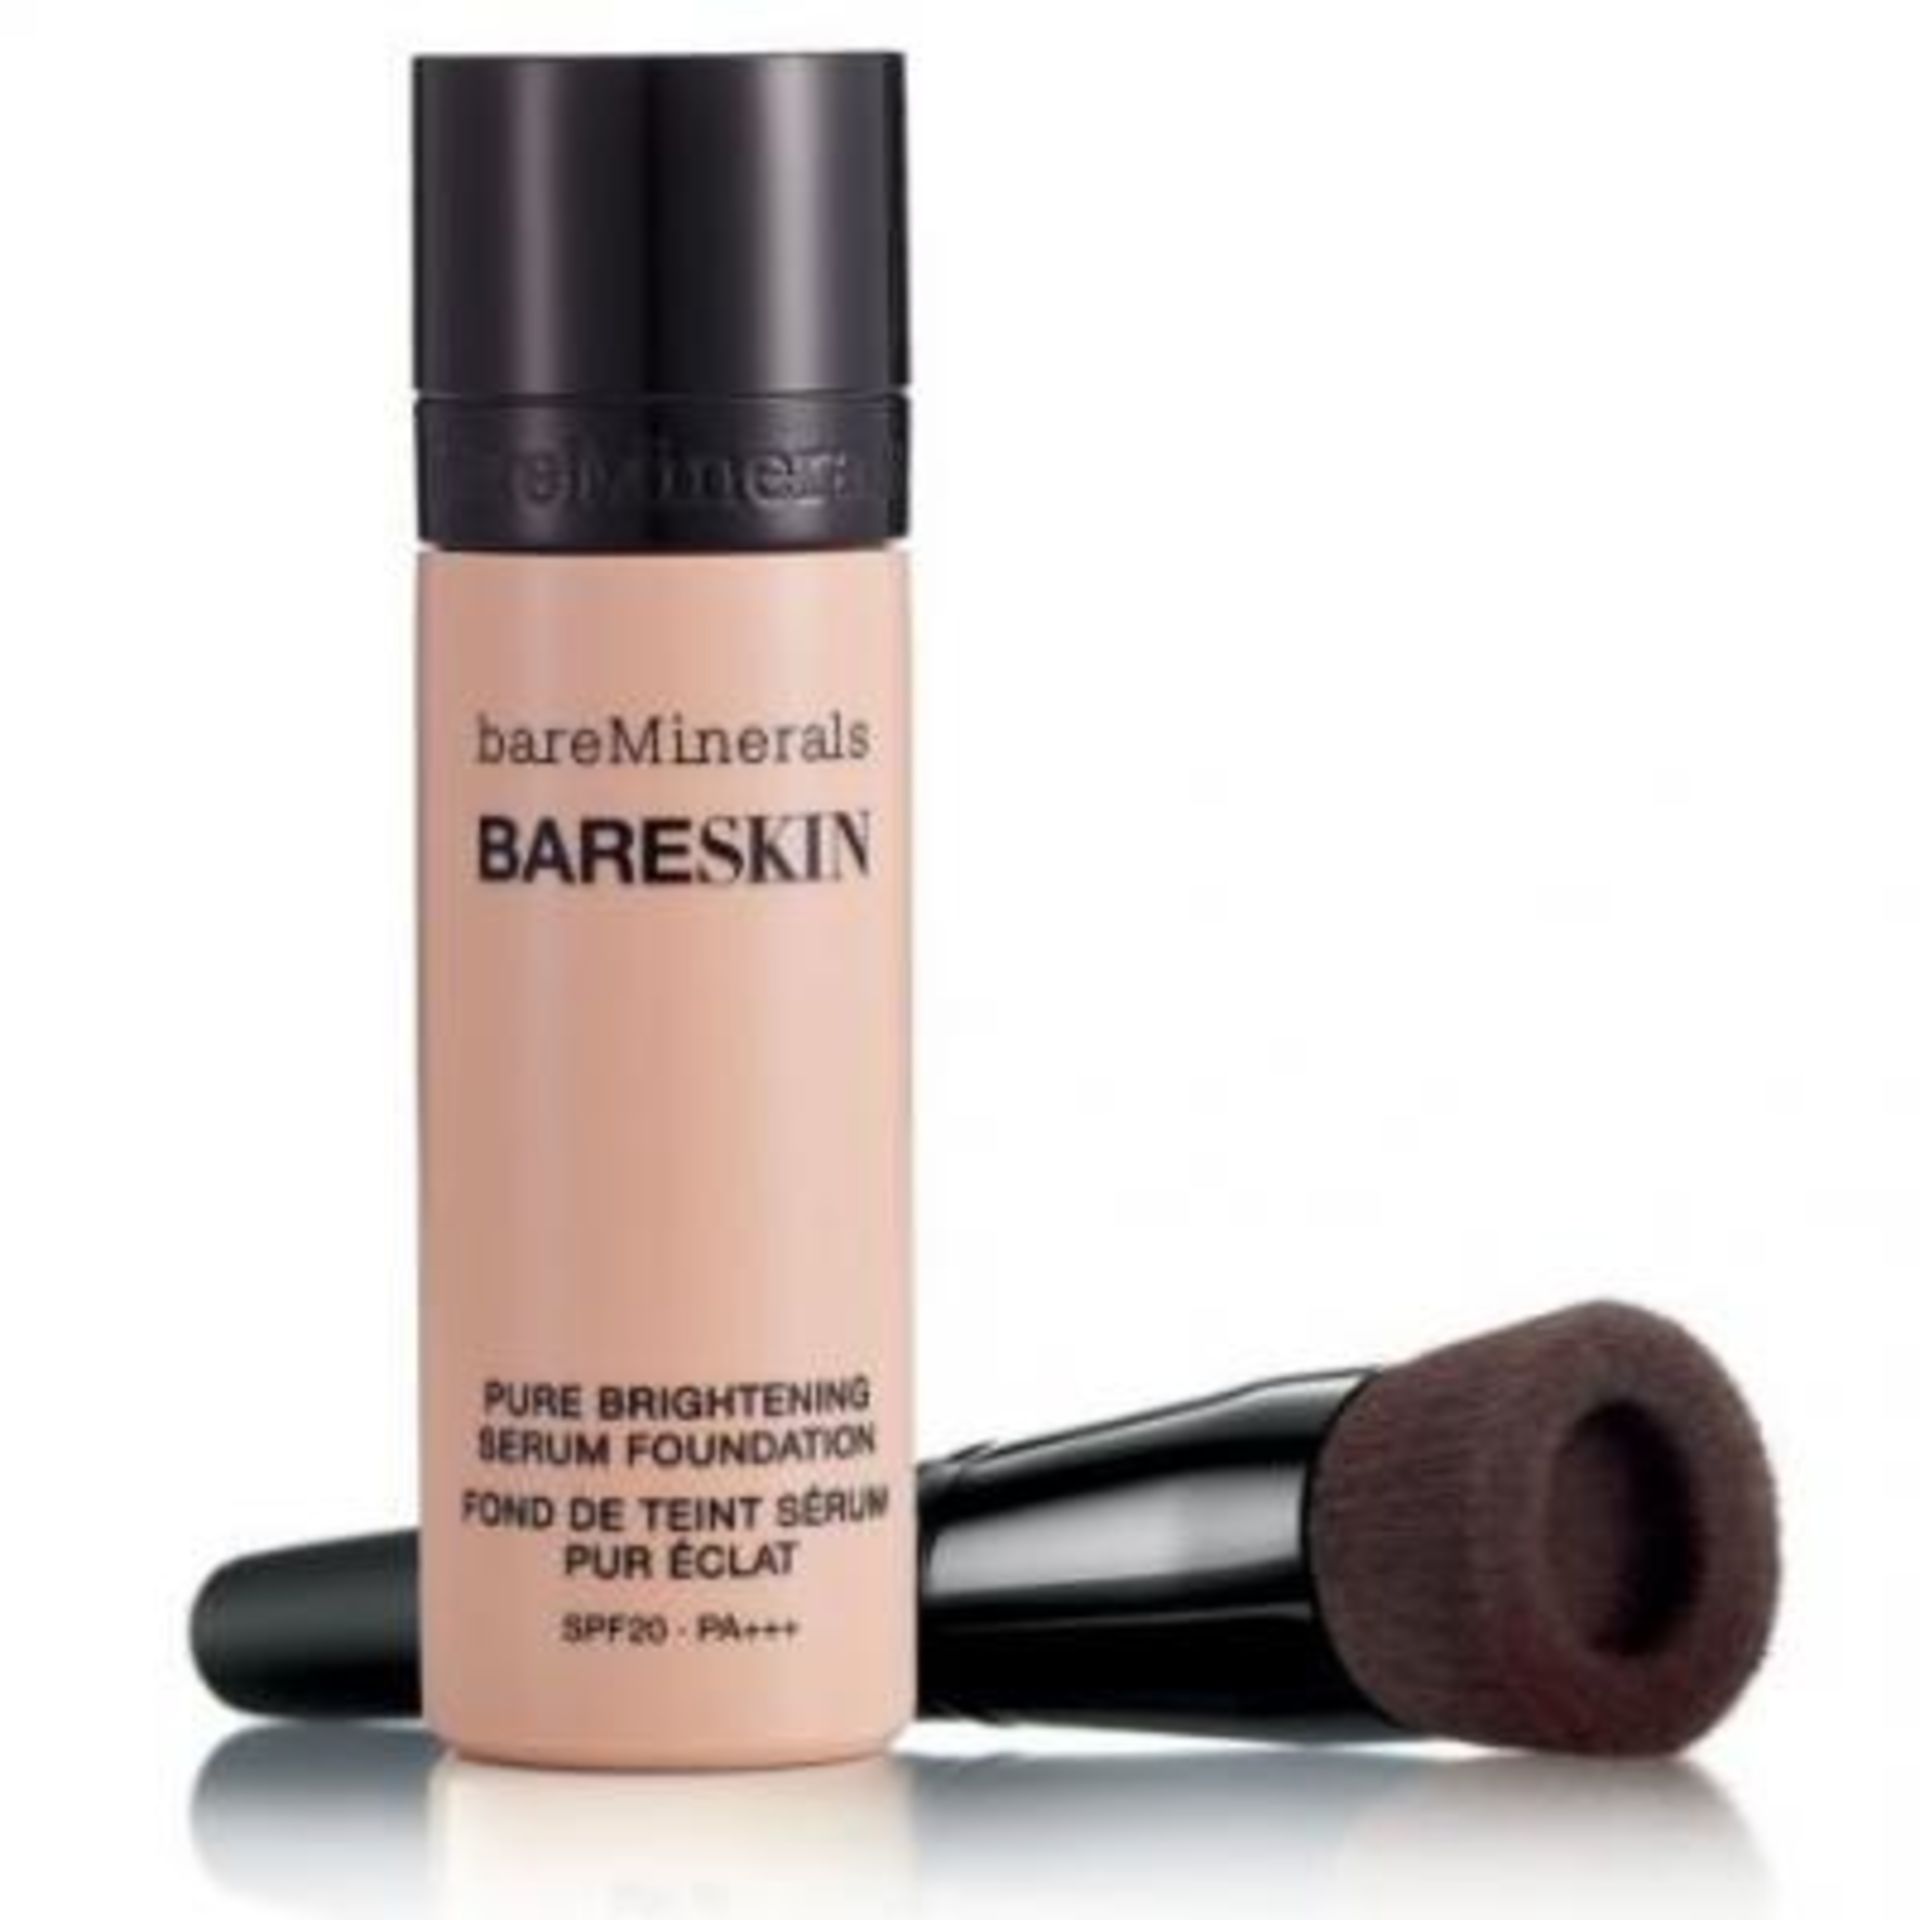 1 x Bare Escentuals bareMinerals “BARESKIN” Perfecting Face Brush - Genuine Product - Brand New